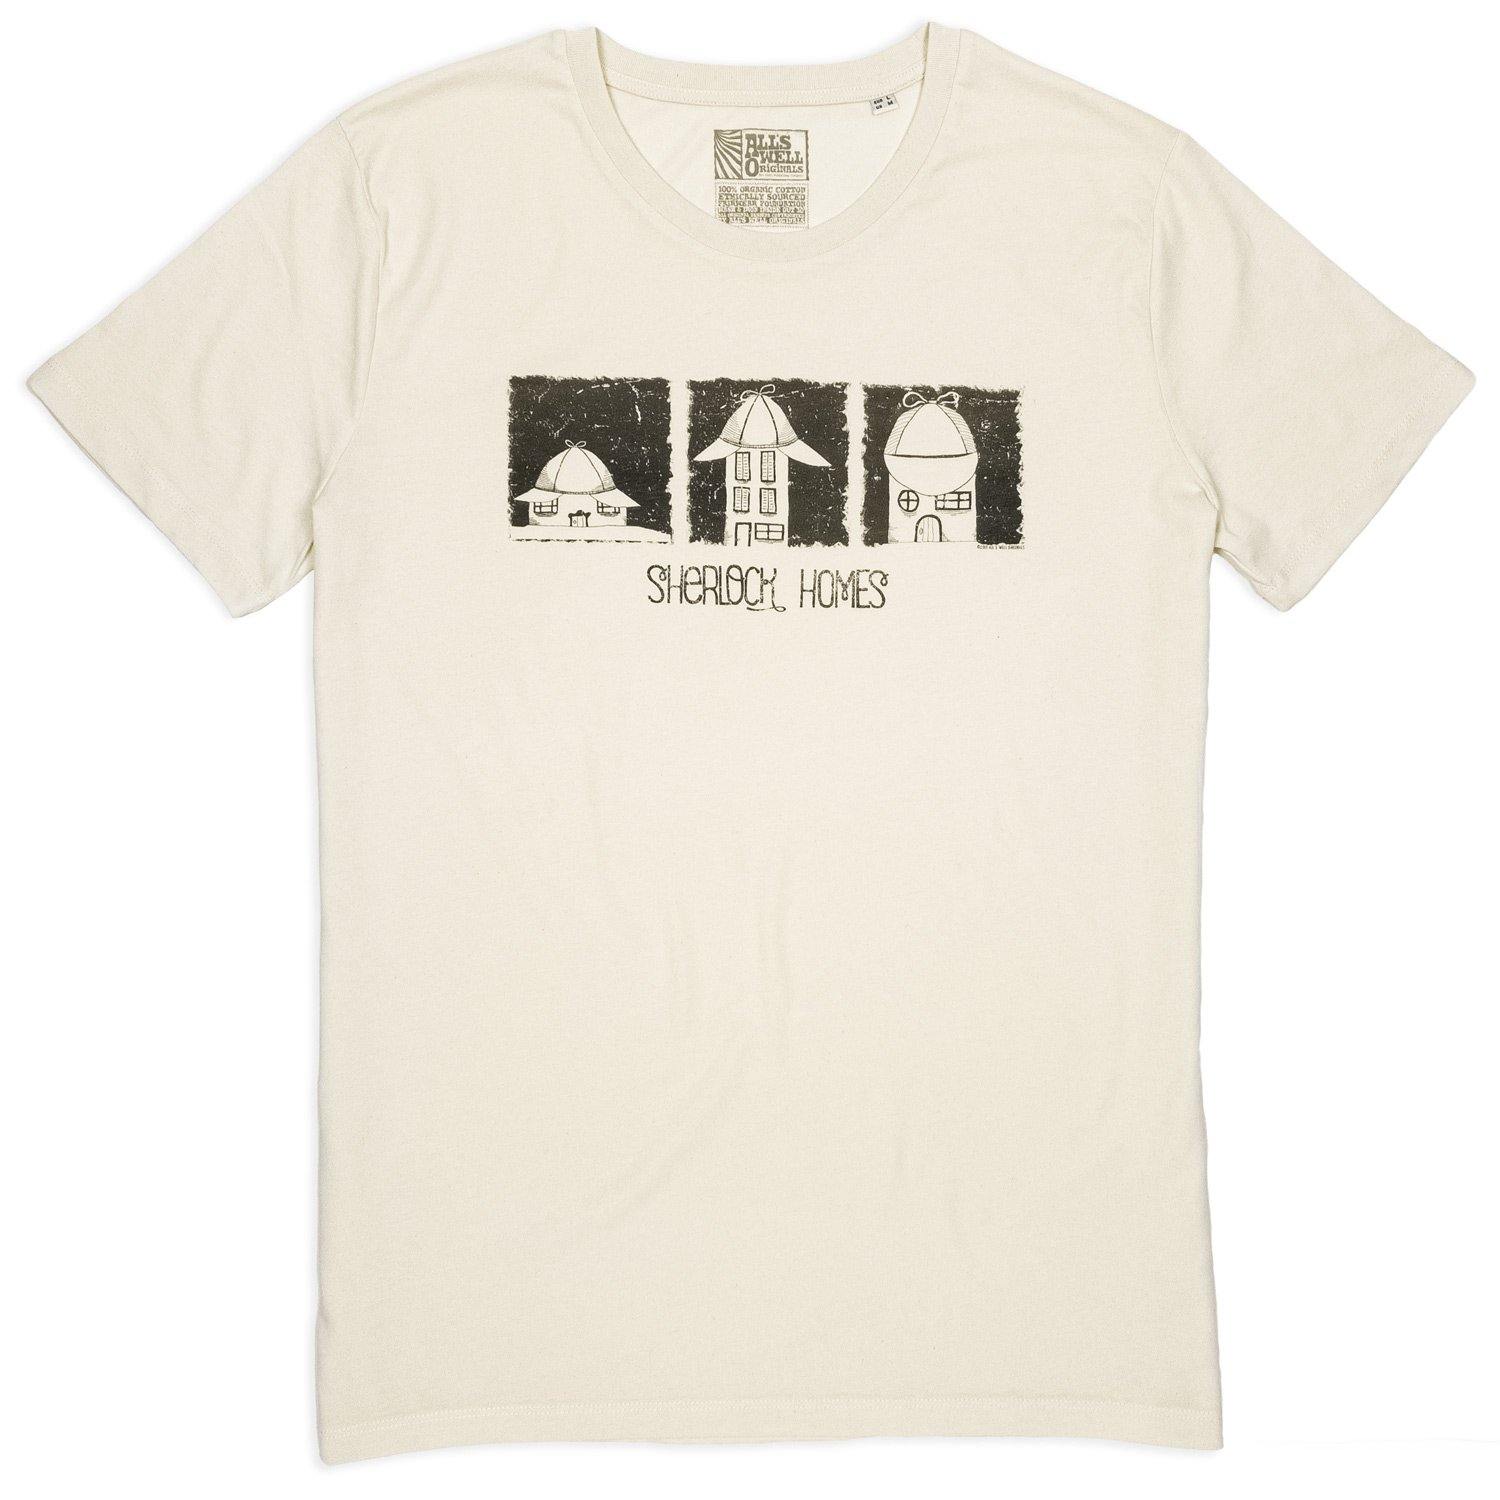 Sherlock Homes t-shirt hand printed organic cotton t-shirt